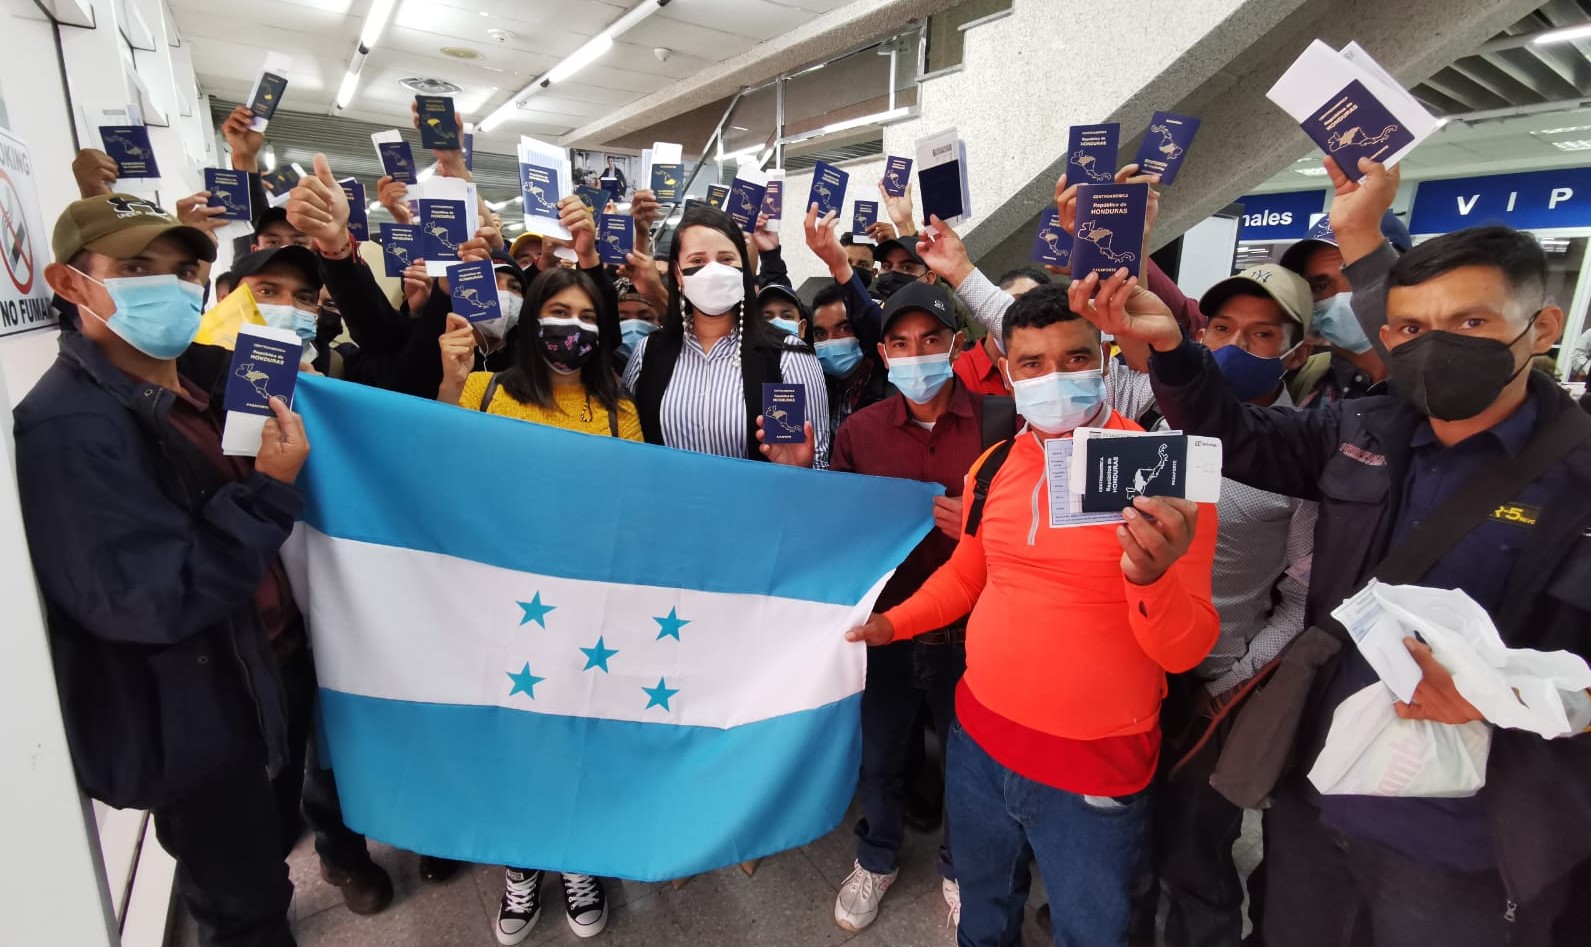 Grupo de hondureños viajan a trabajar legalmente en España